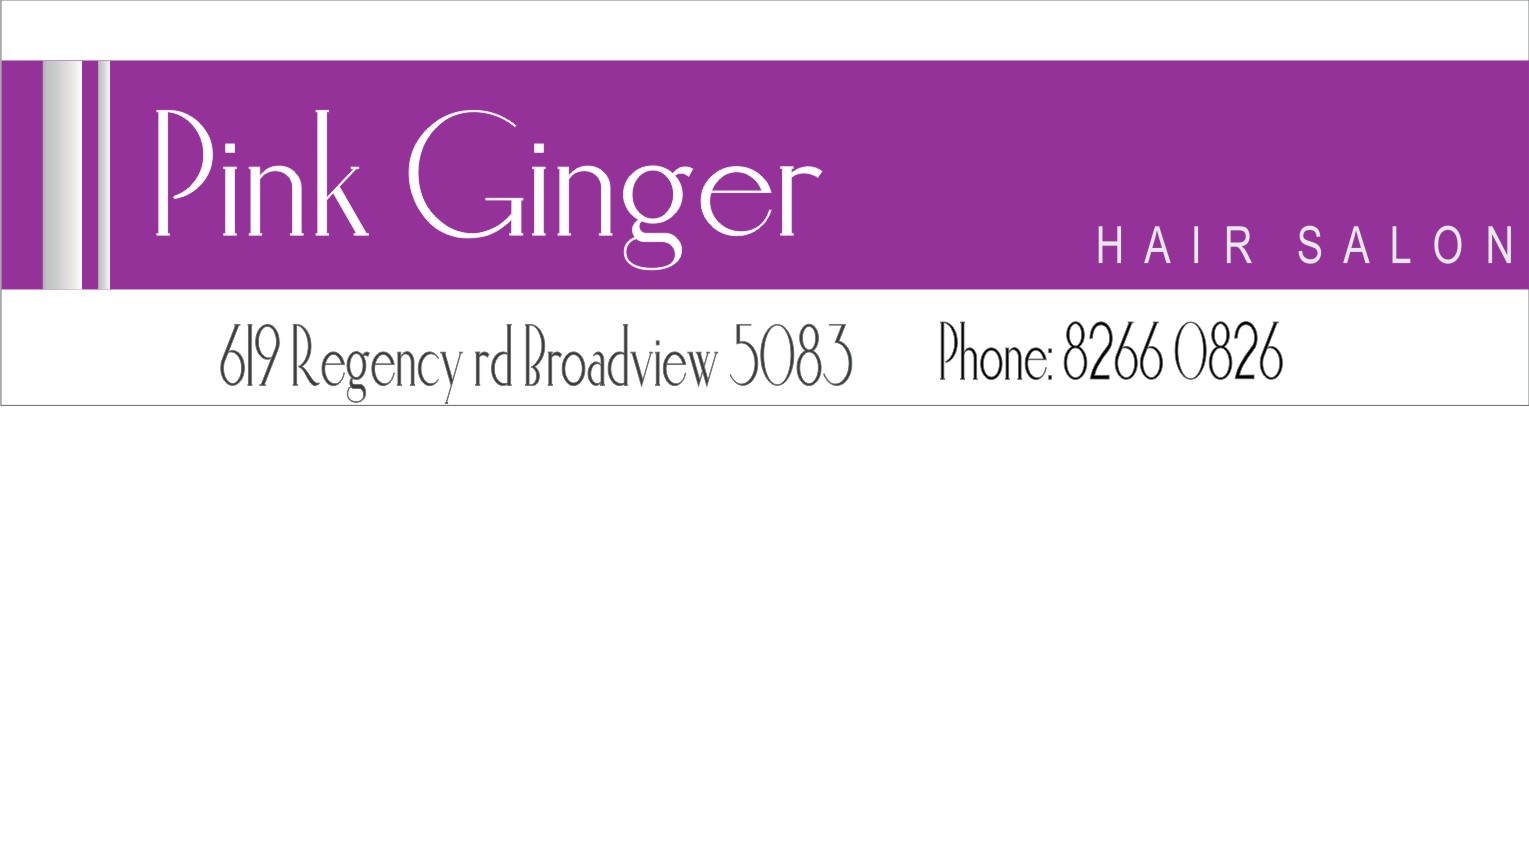 Pink Ginger Hair Salon